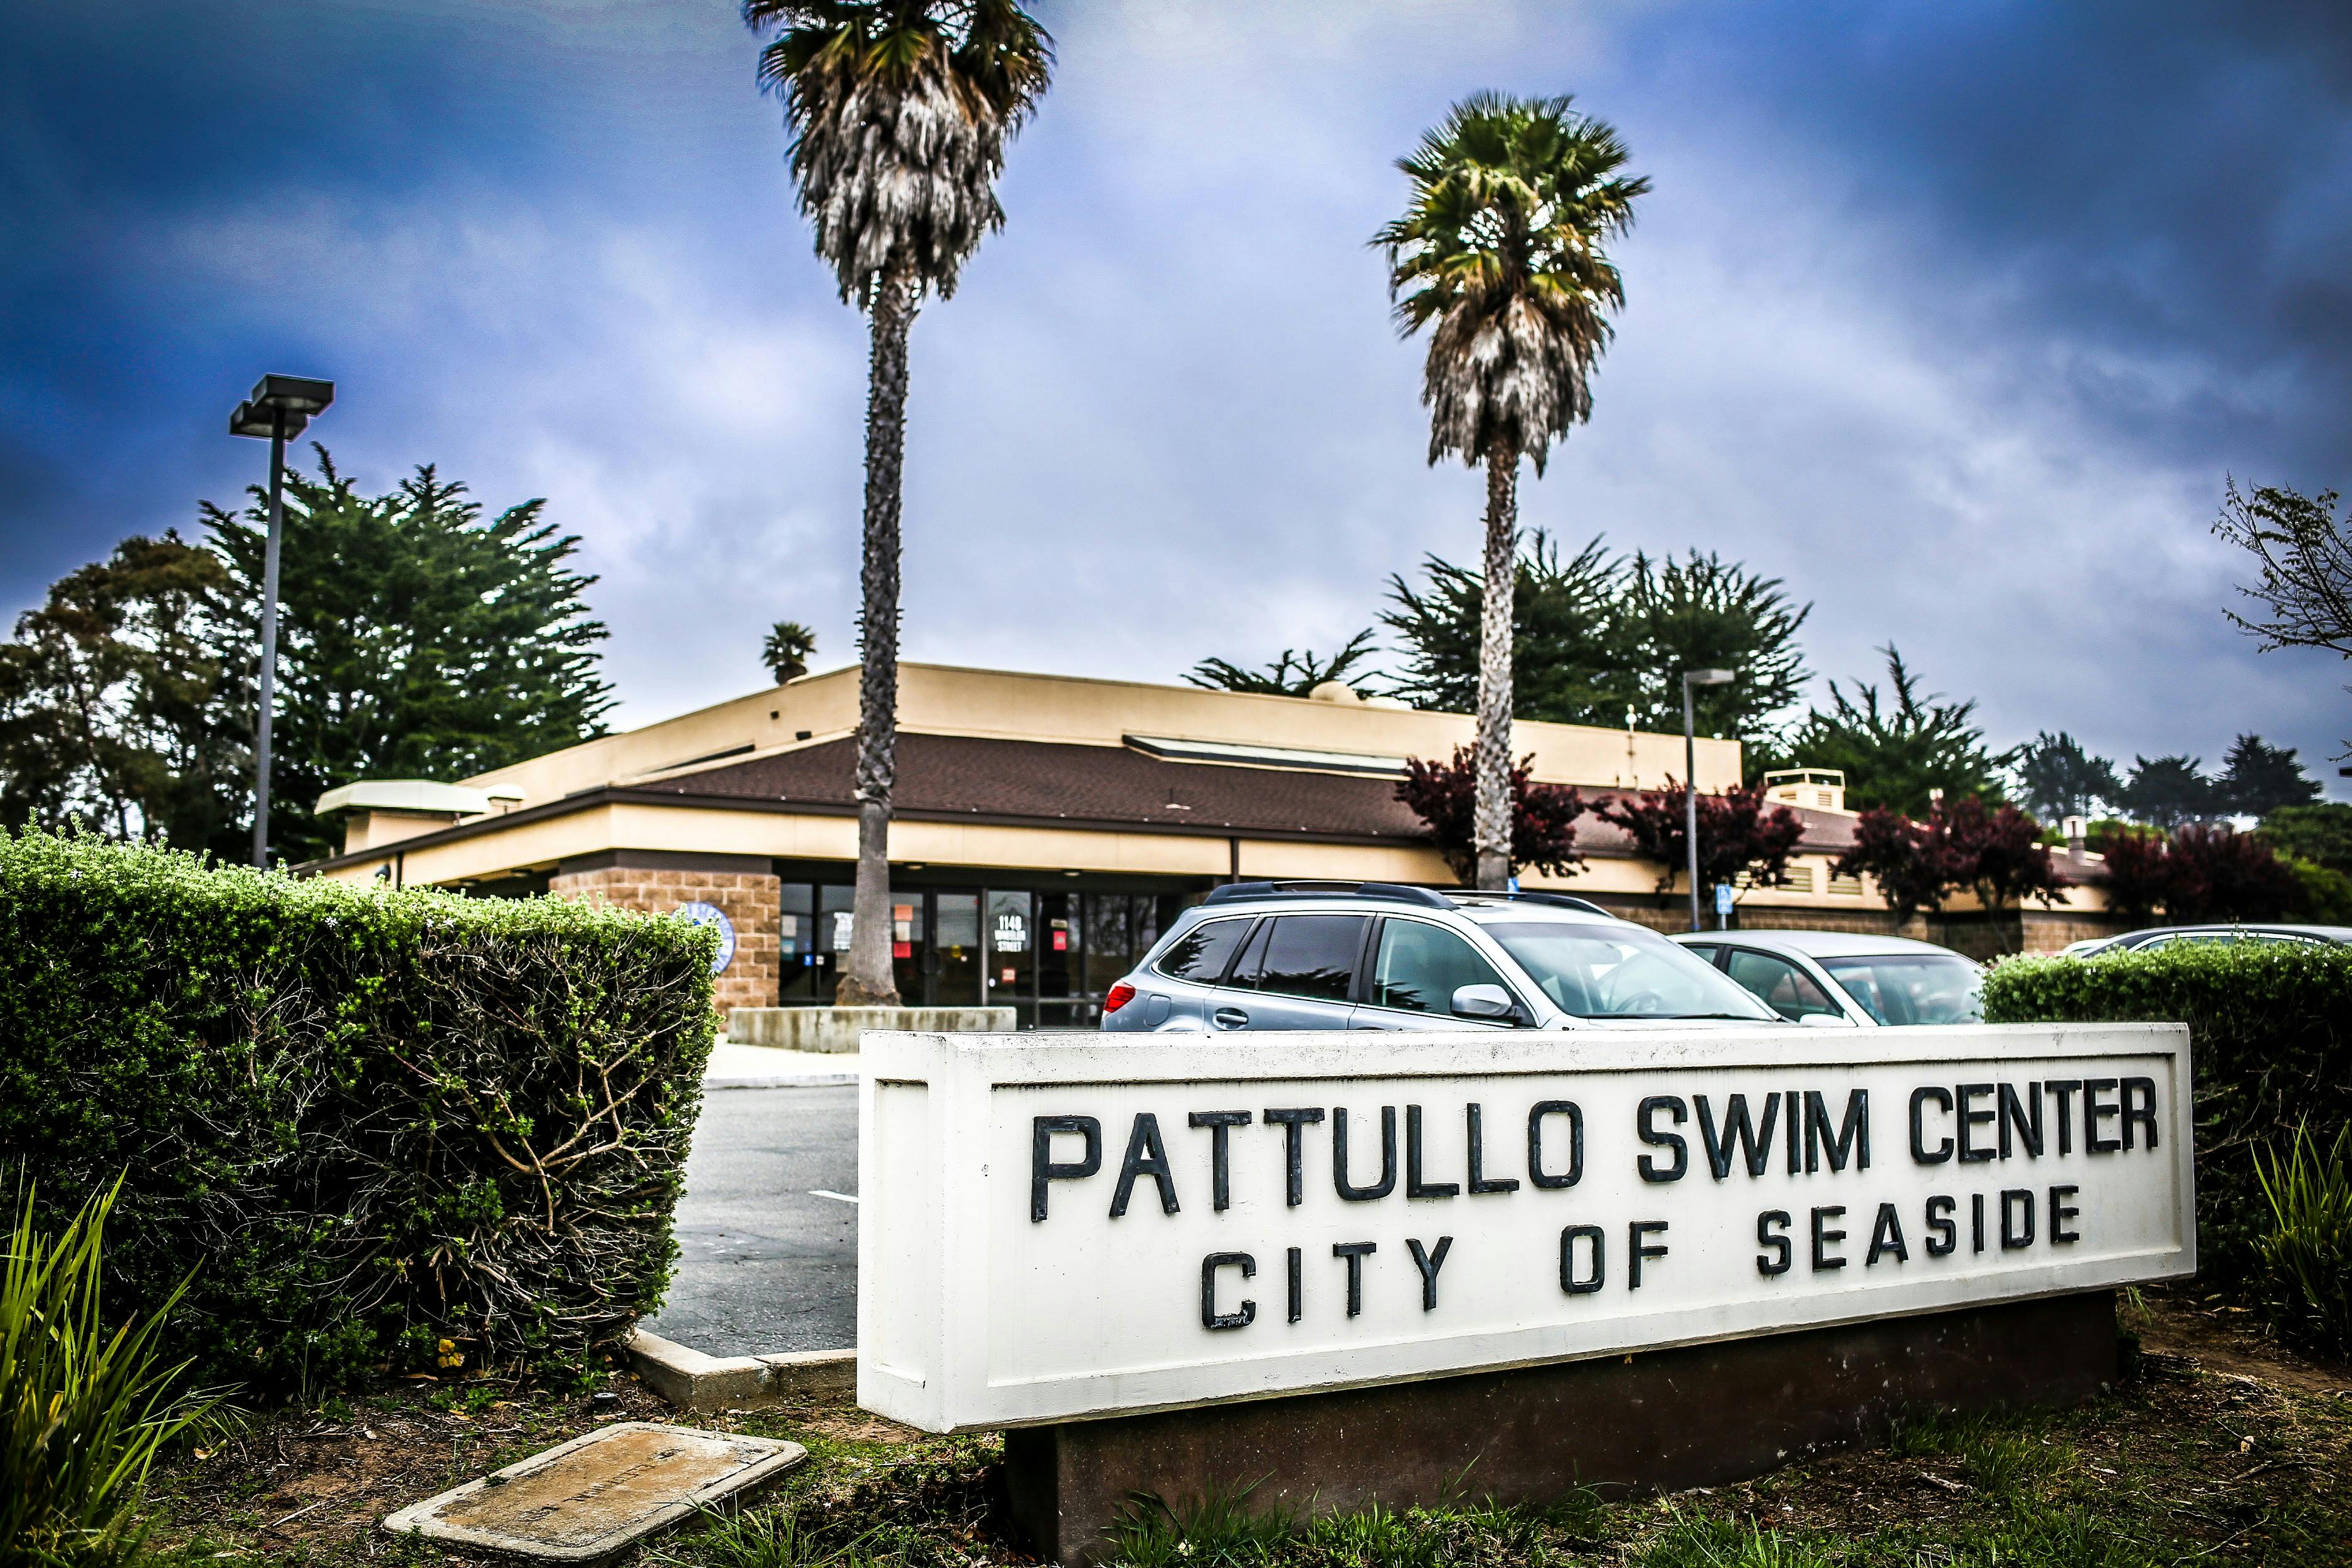 Pattullo Swim Center